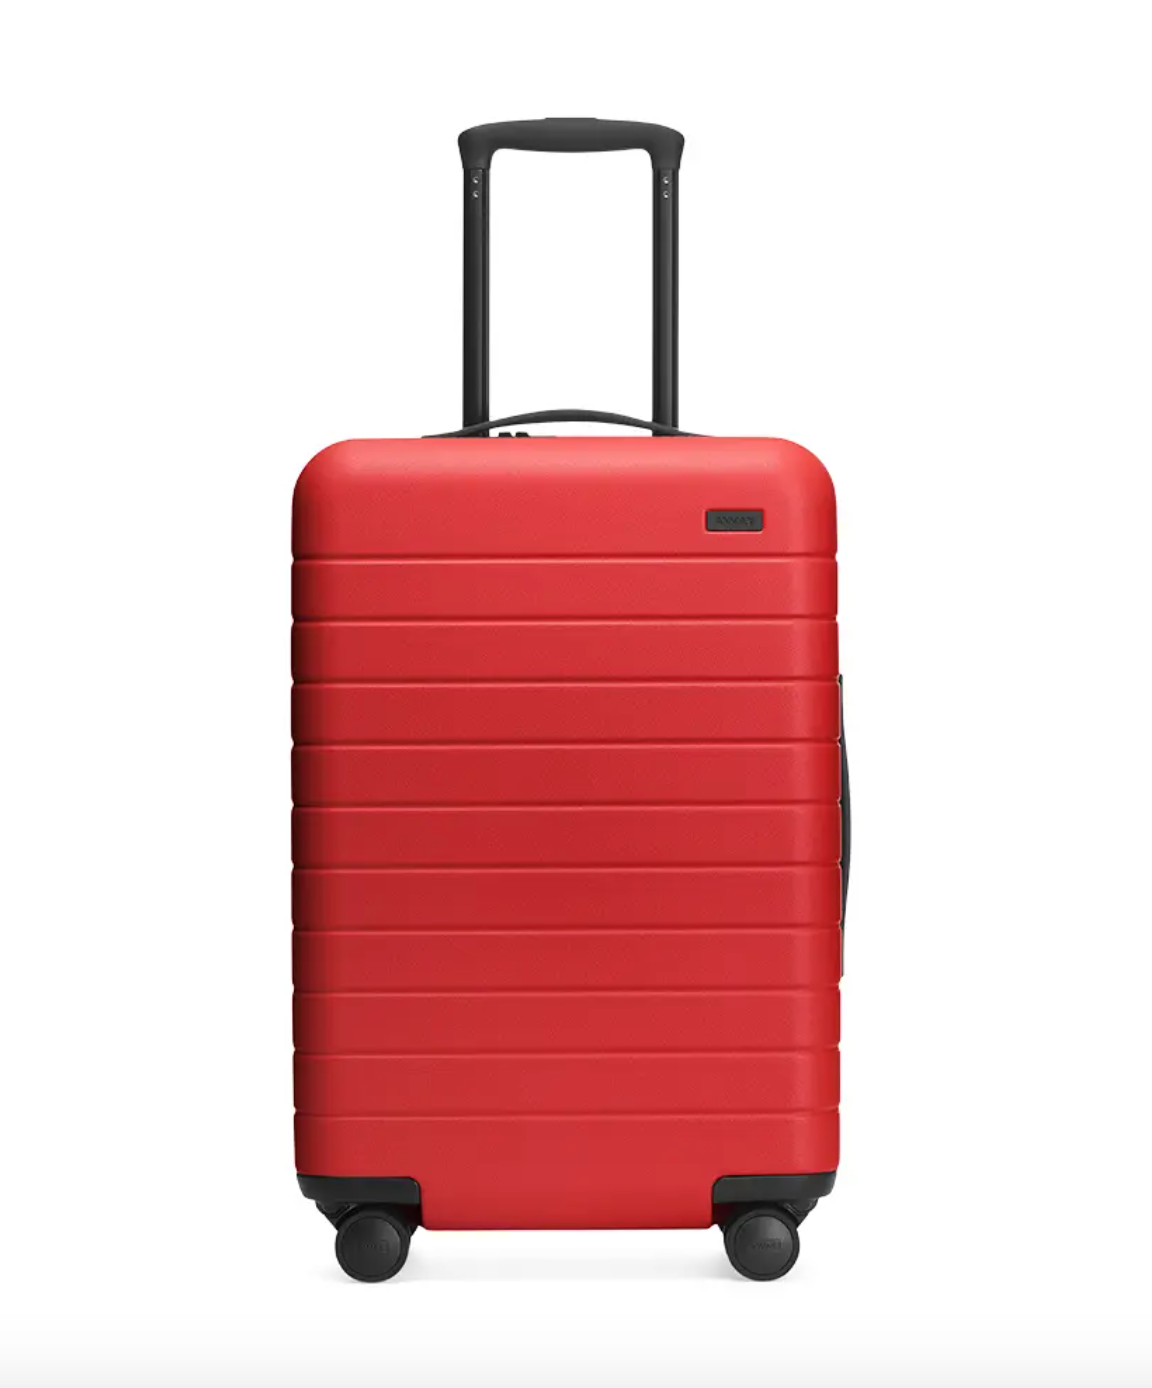 suitcase sale 4 wheel